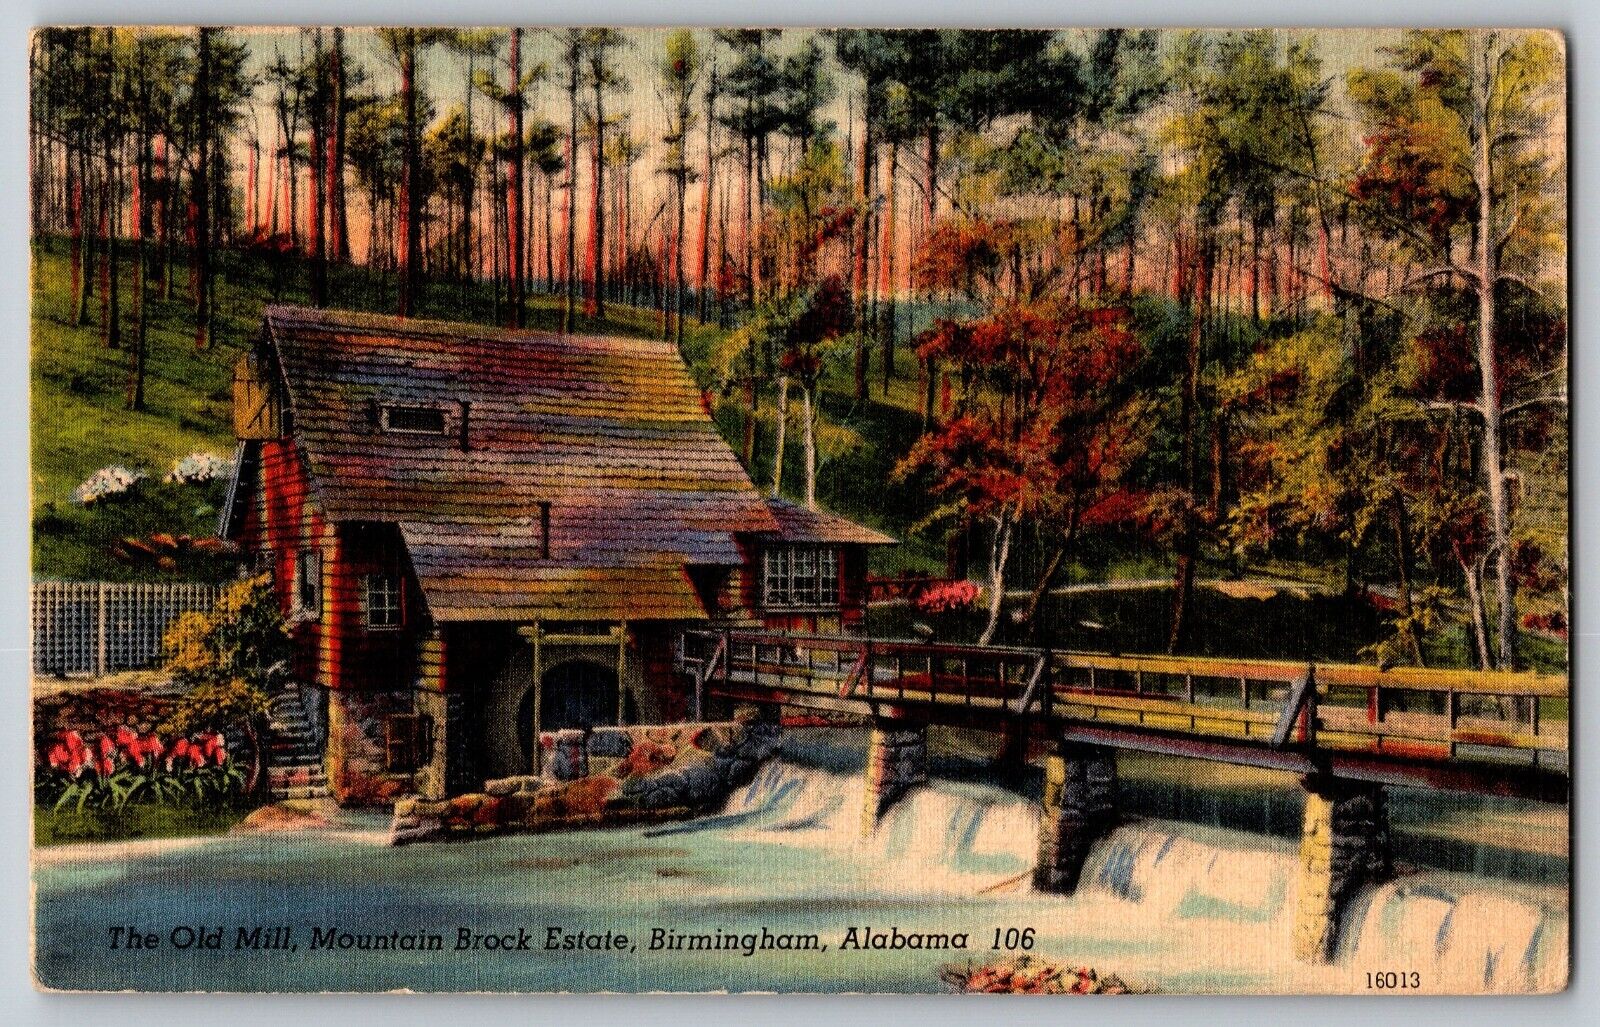 Birmingham, Alabama - The Old Mill At Mountain Brock Estate - Vintage Postcard